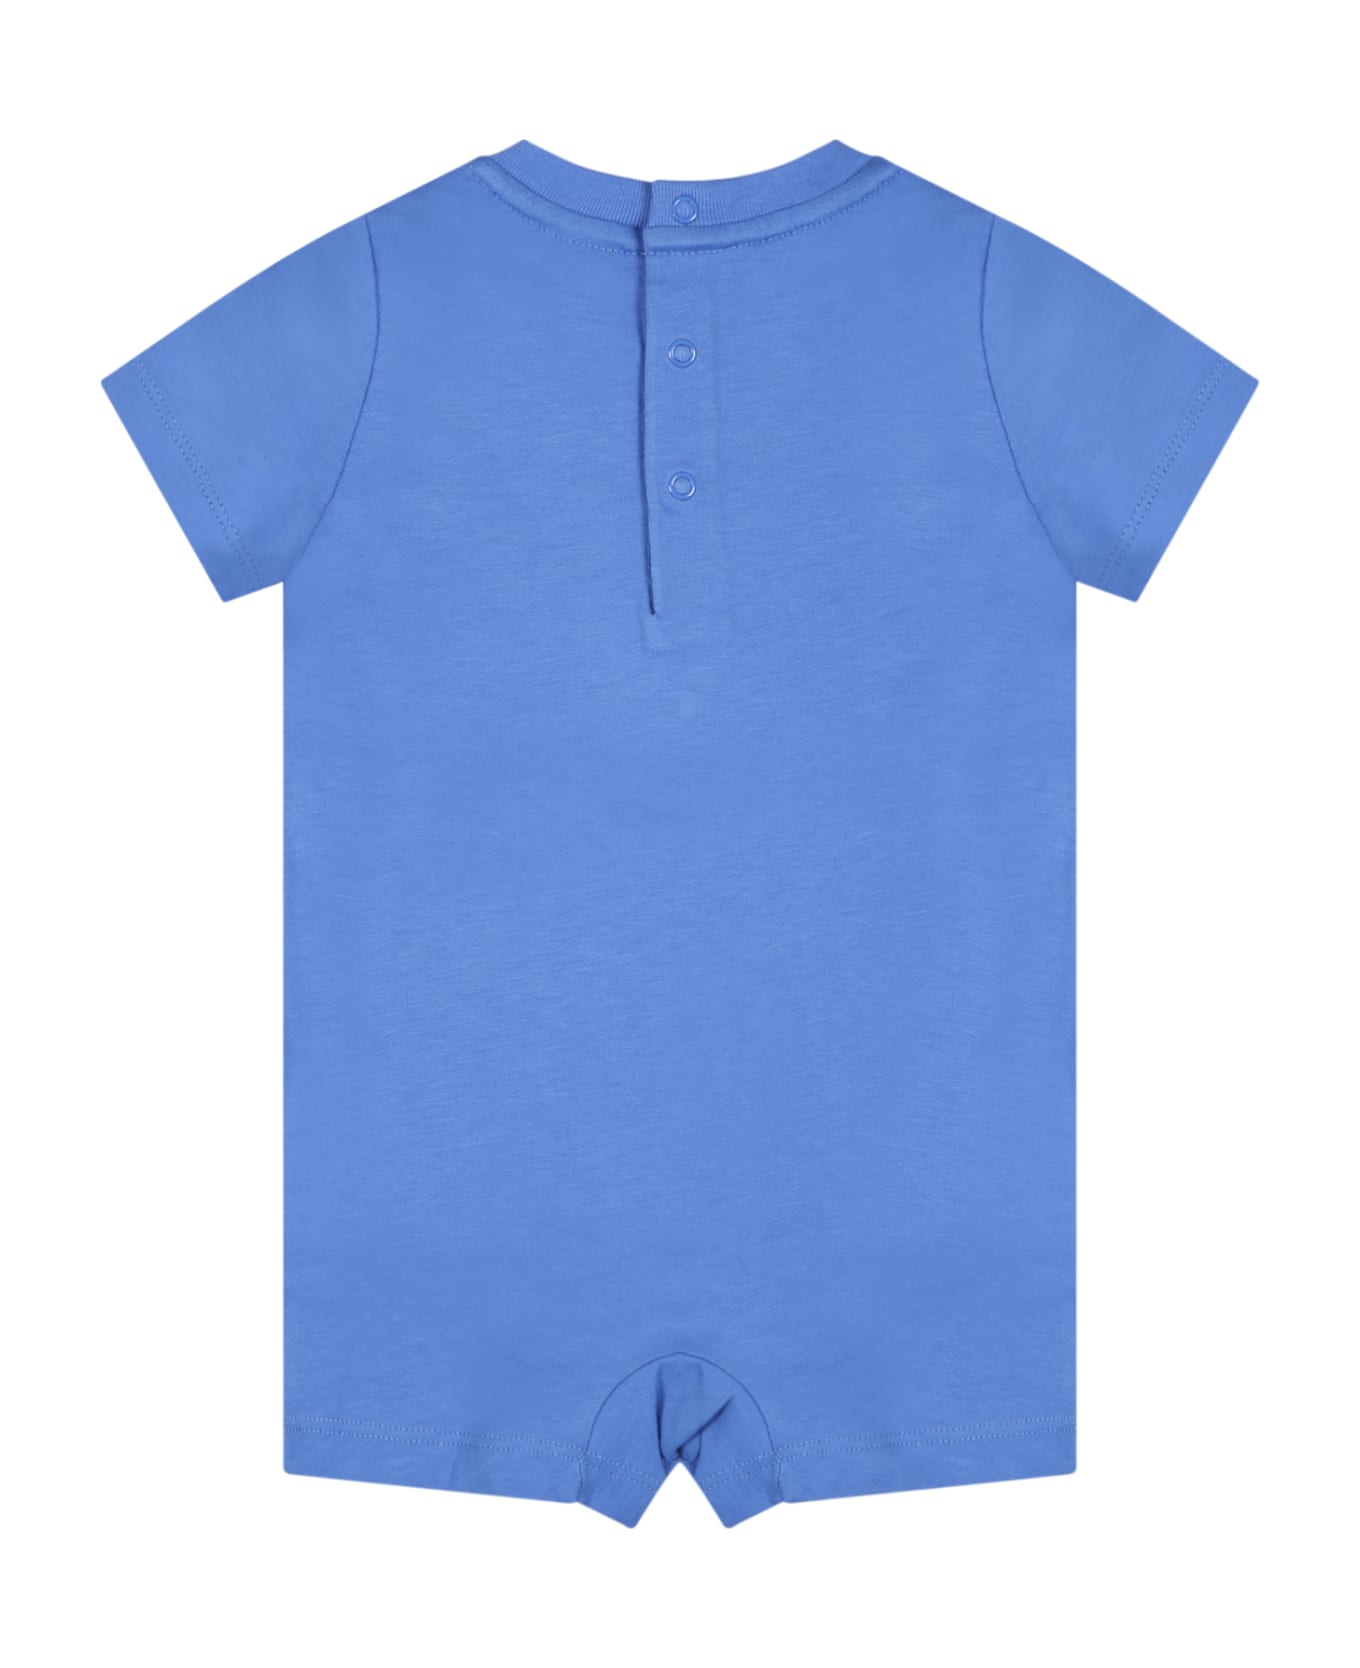 Ralph Lauren Blue Romper For Baby Boy With Bear - Light Blue